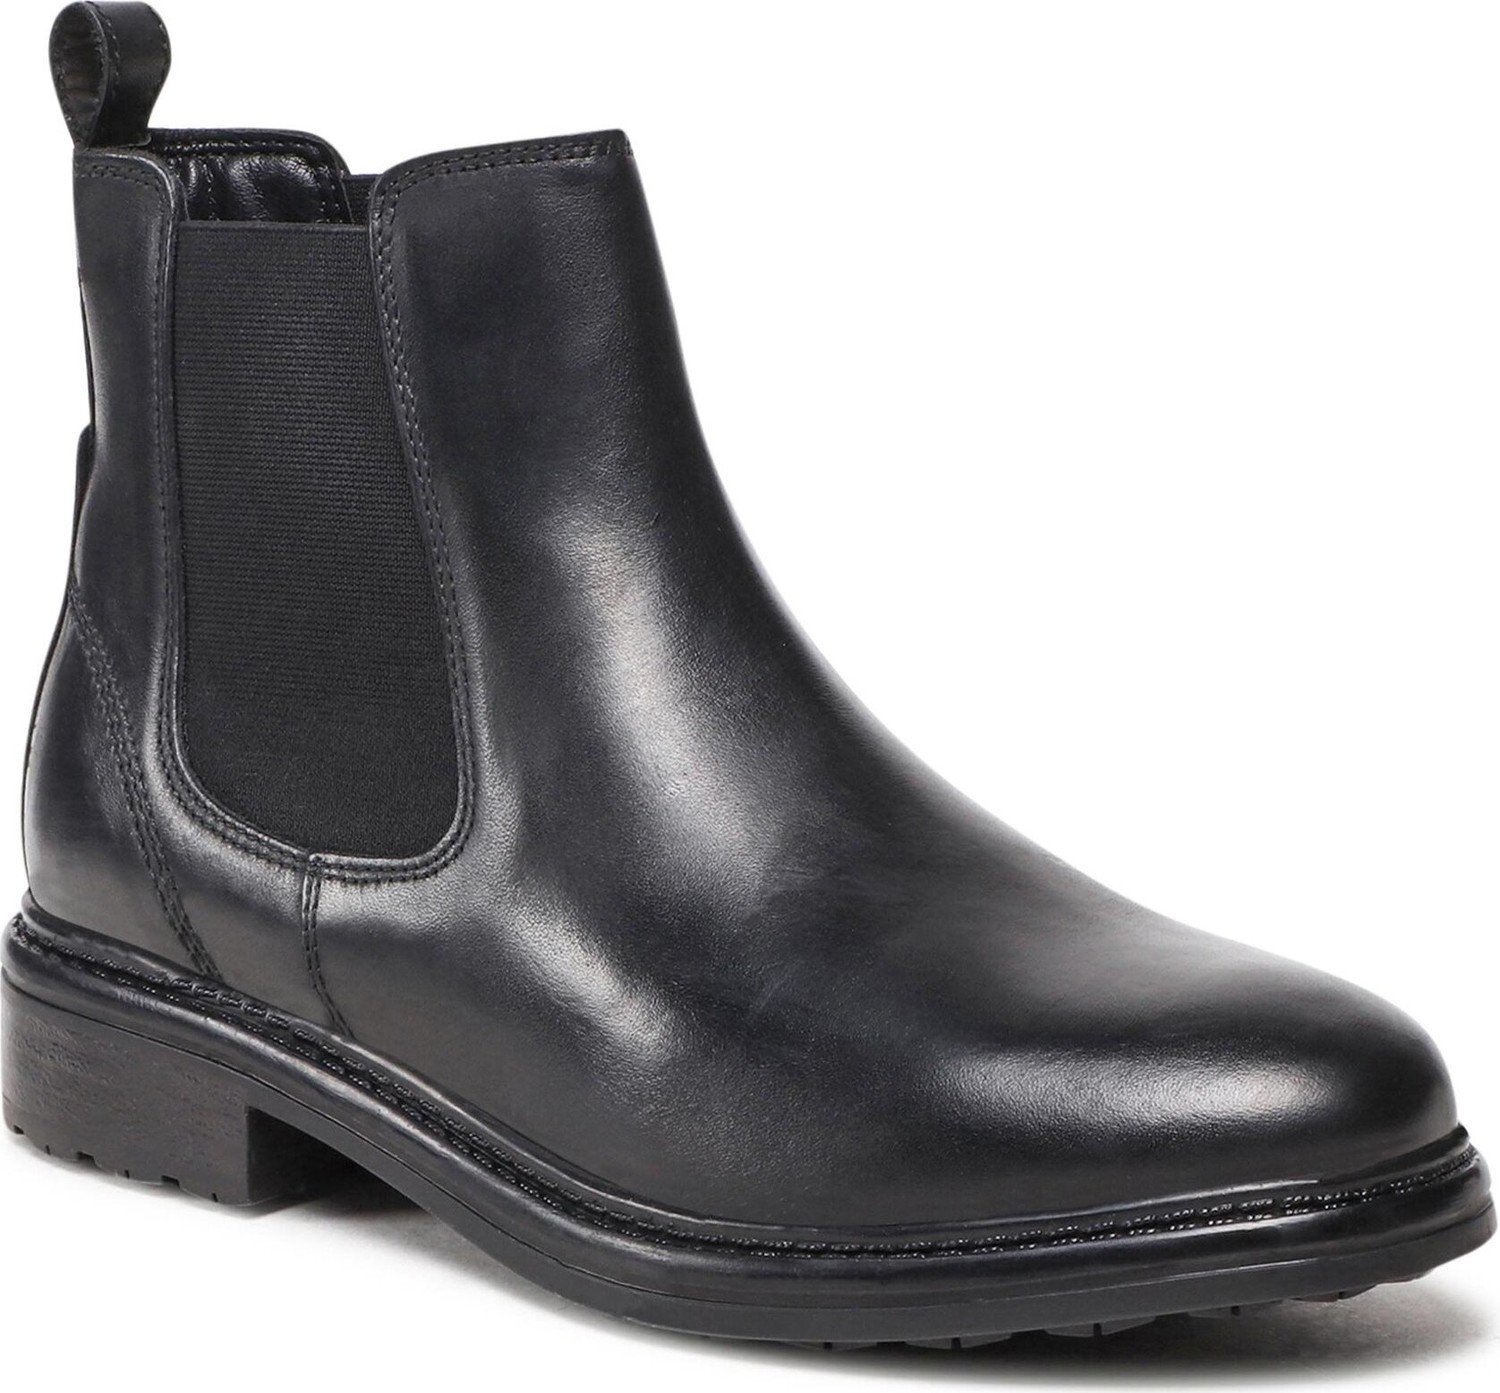 Kotníková obuv s elastickým prvkem Lasocki WI23-LIEGI-01 Black